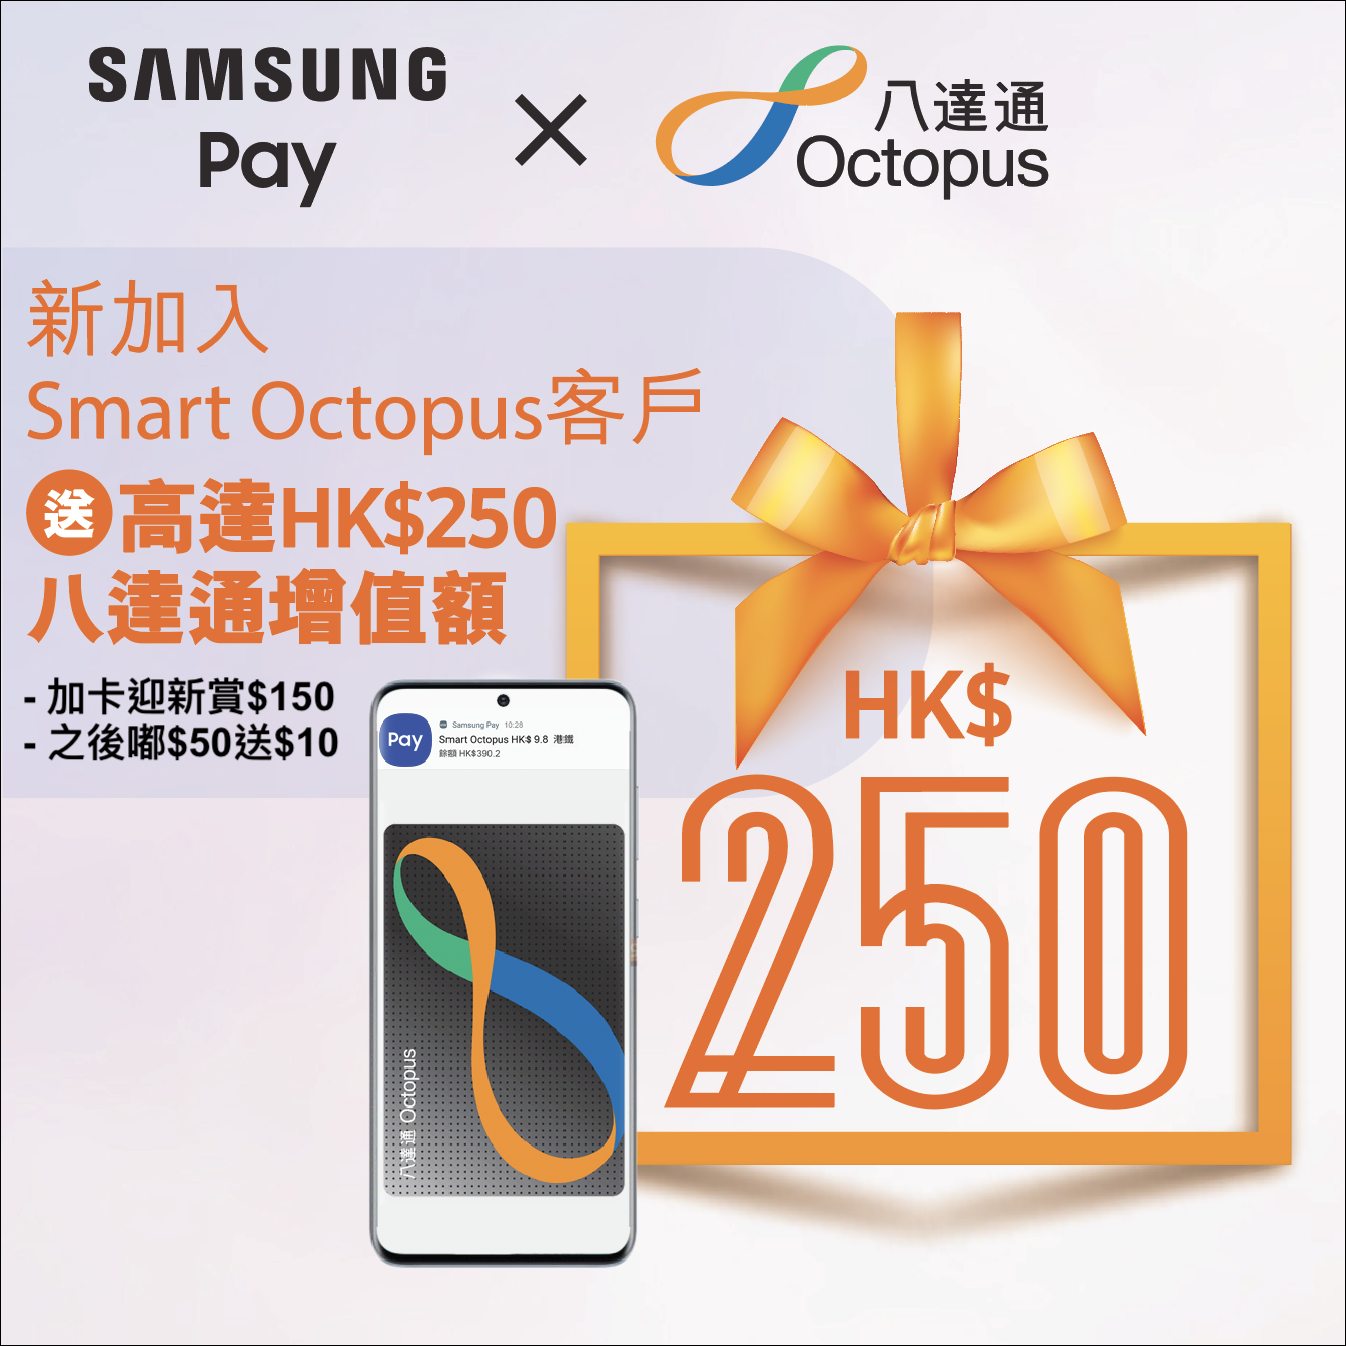 Samsung Pay Smart Octopus 新客戶高達$250八達通增值額獎賞